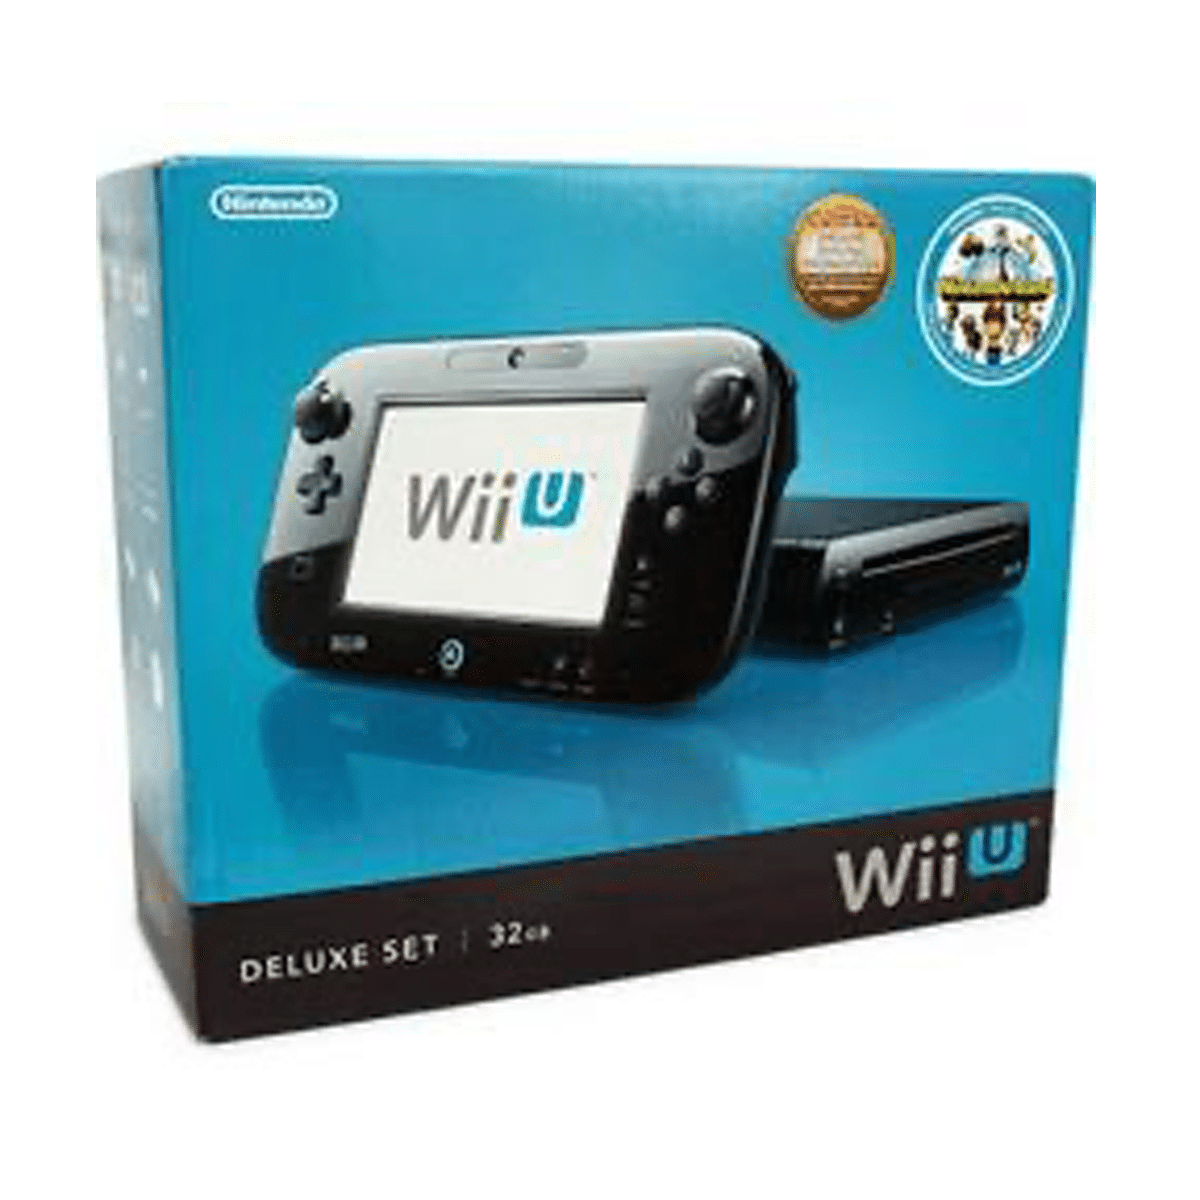 Nintendo Wii U Premium Pack med - Komplet i Boks (CIB) - Uden Spil - Retro Spilbutik